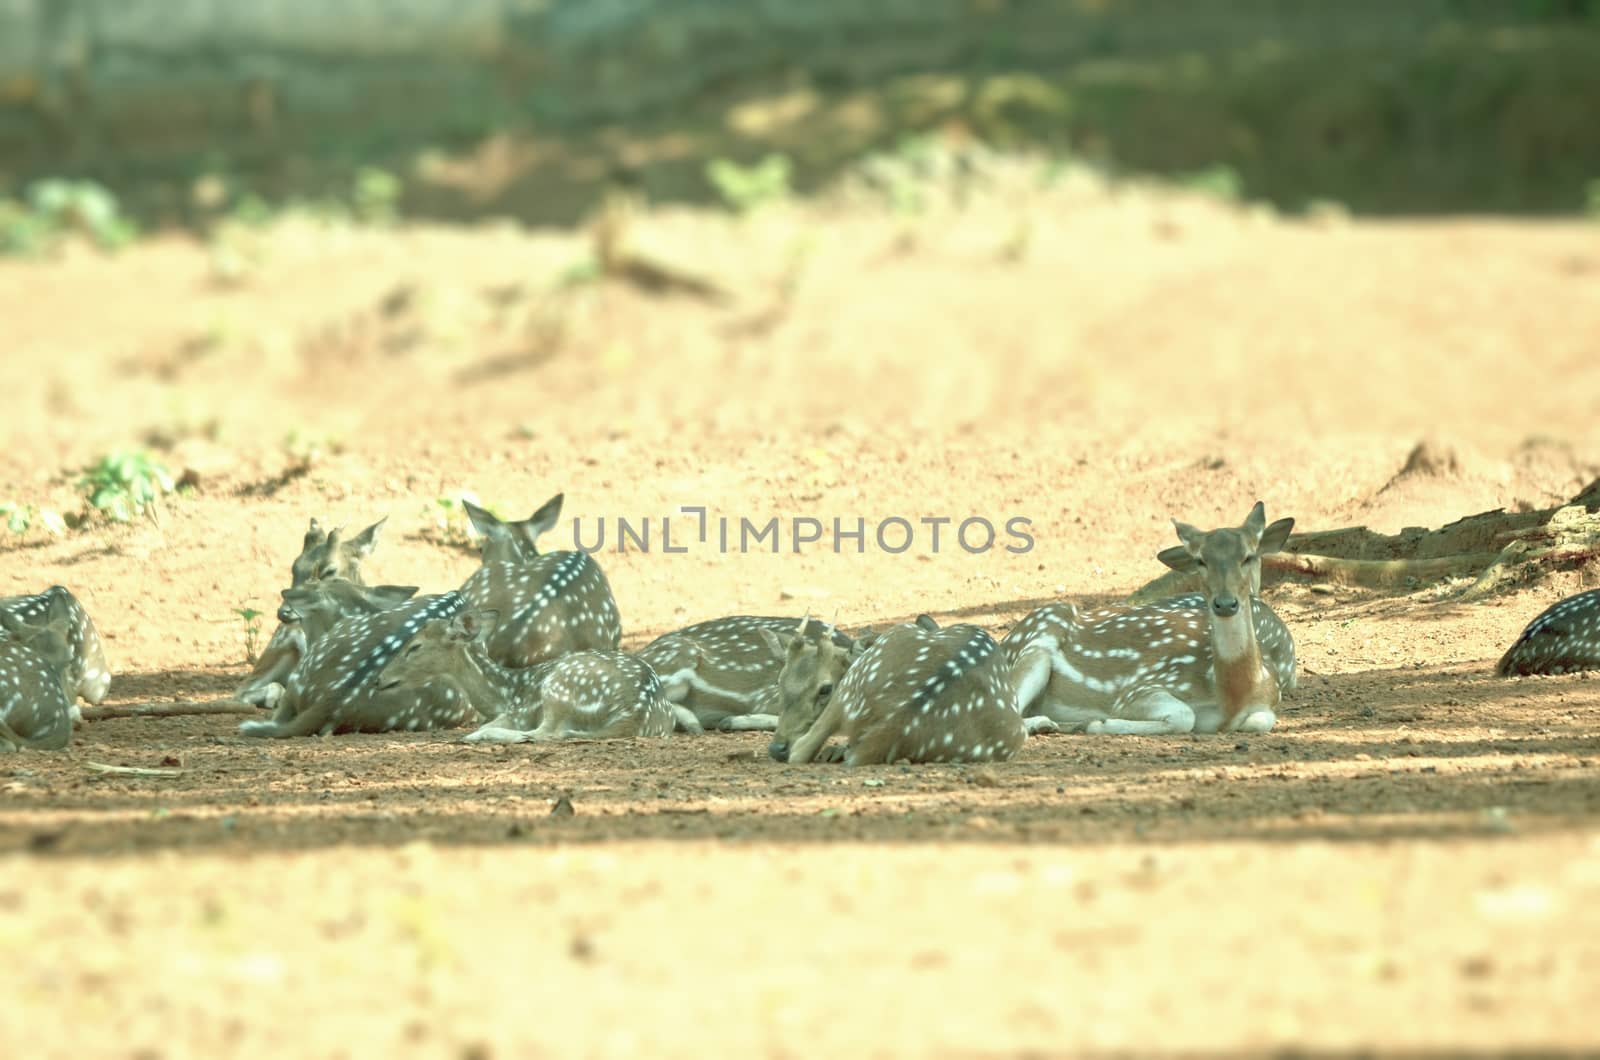 Whitetail deer doe in the field by Emdaduljs